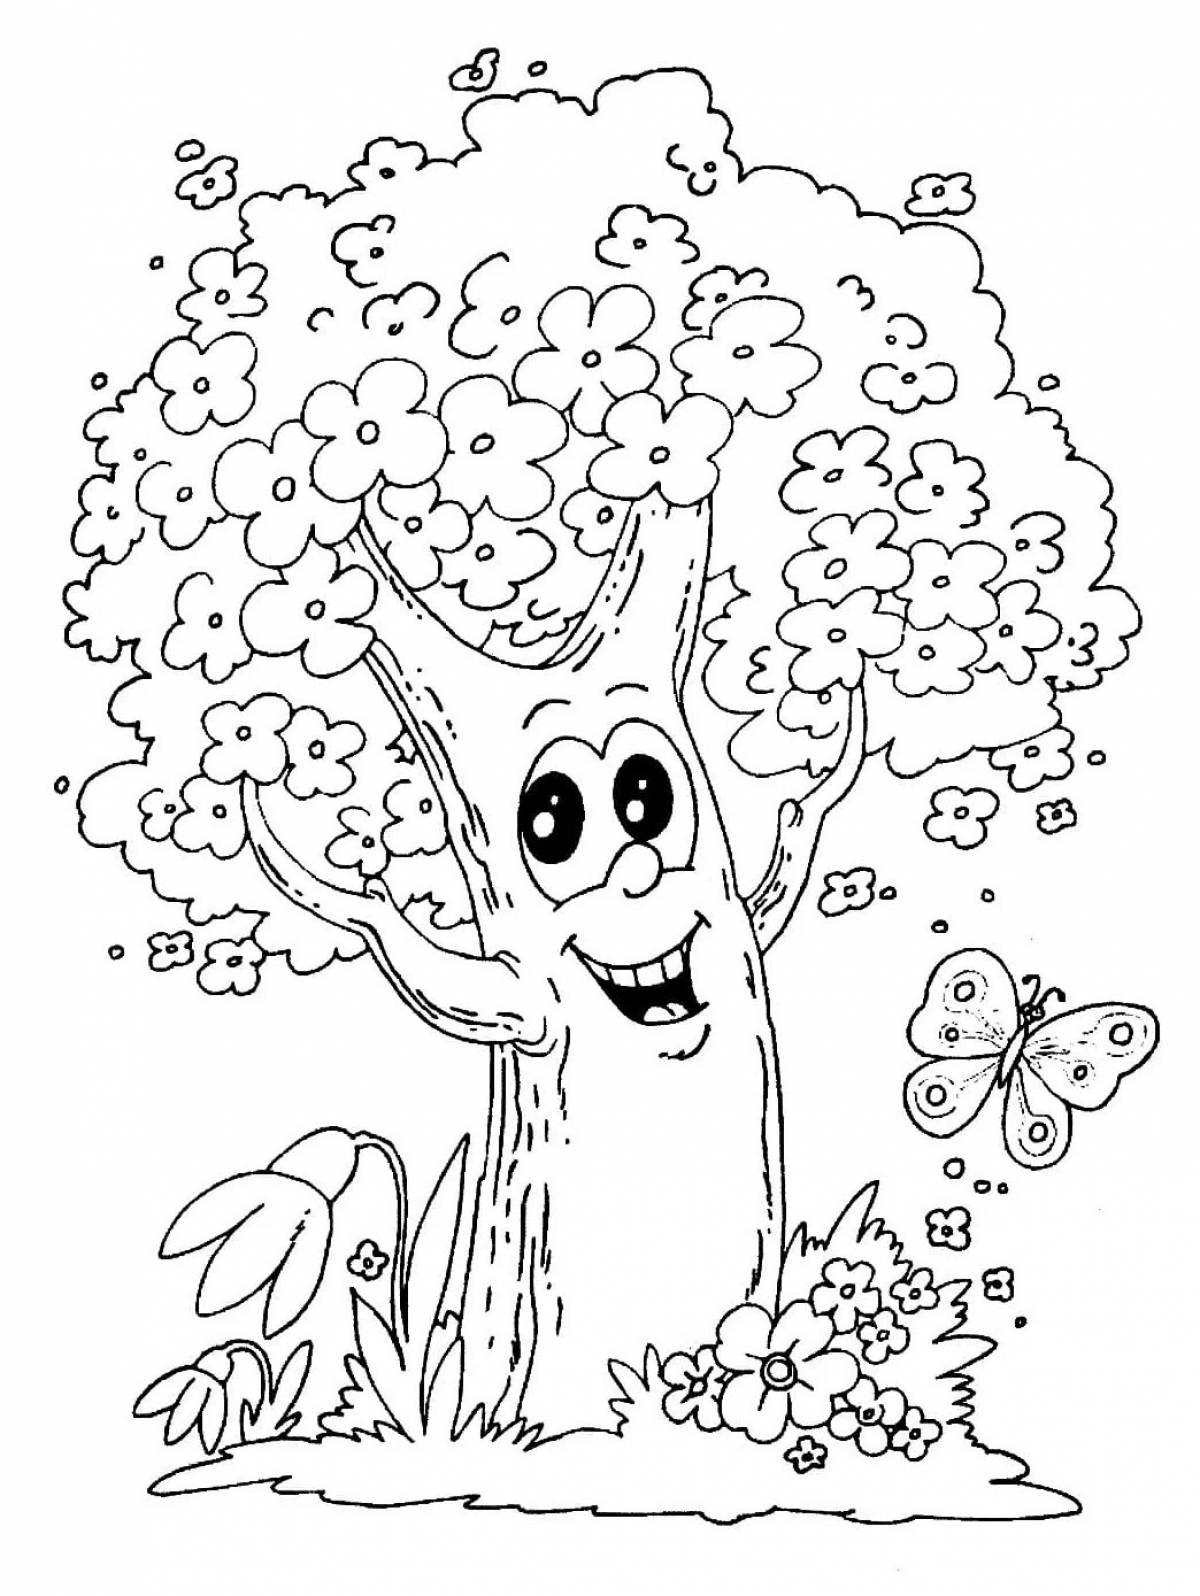 Fairy tree #4